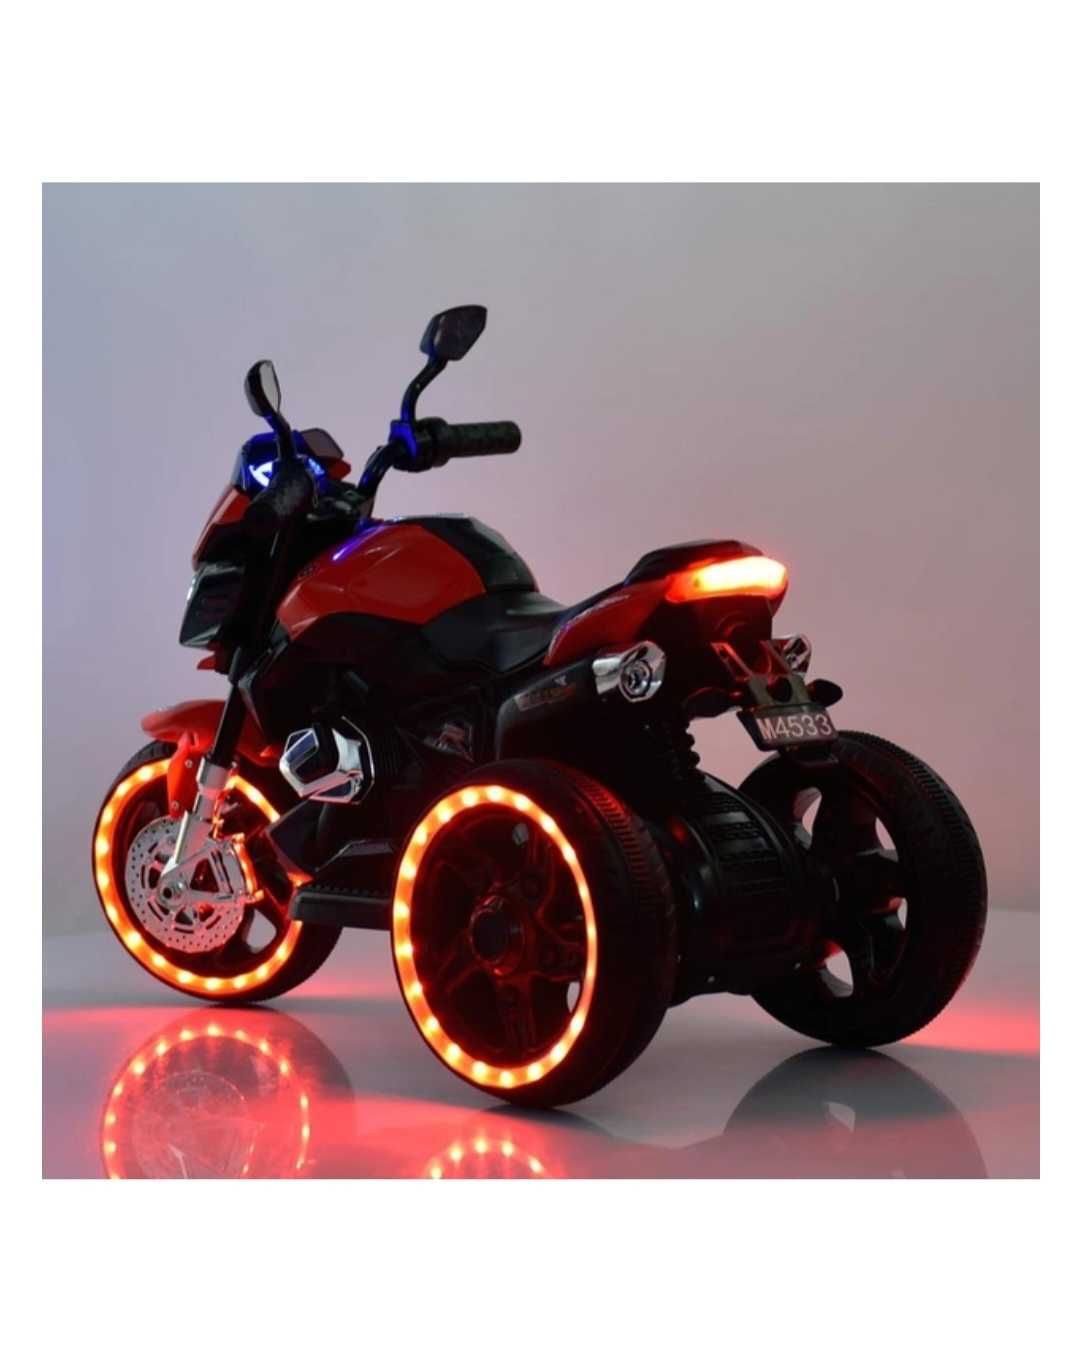 Мотоцикл Bambi Racer 2х25W M 4533-3 Black-Red